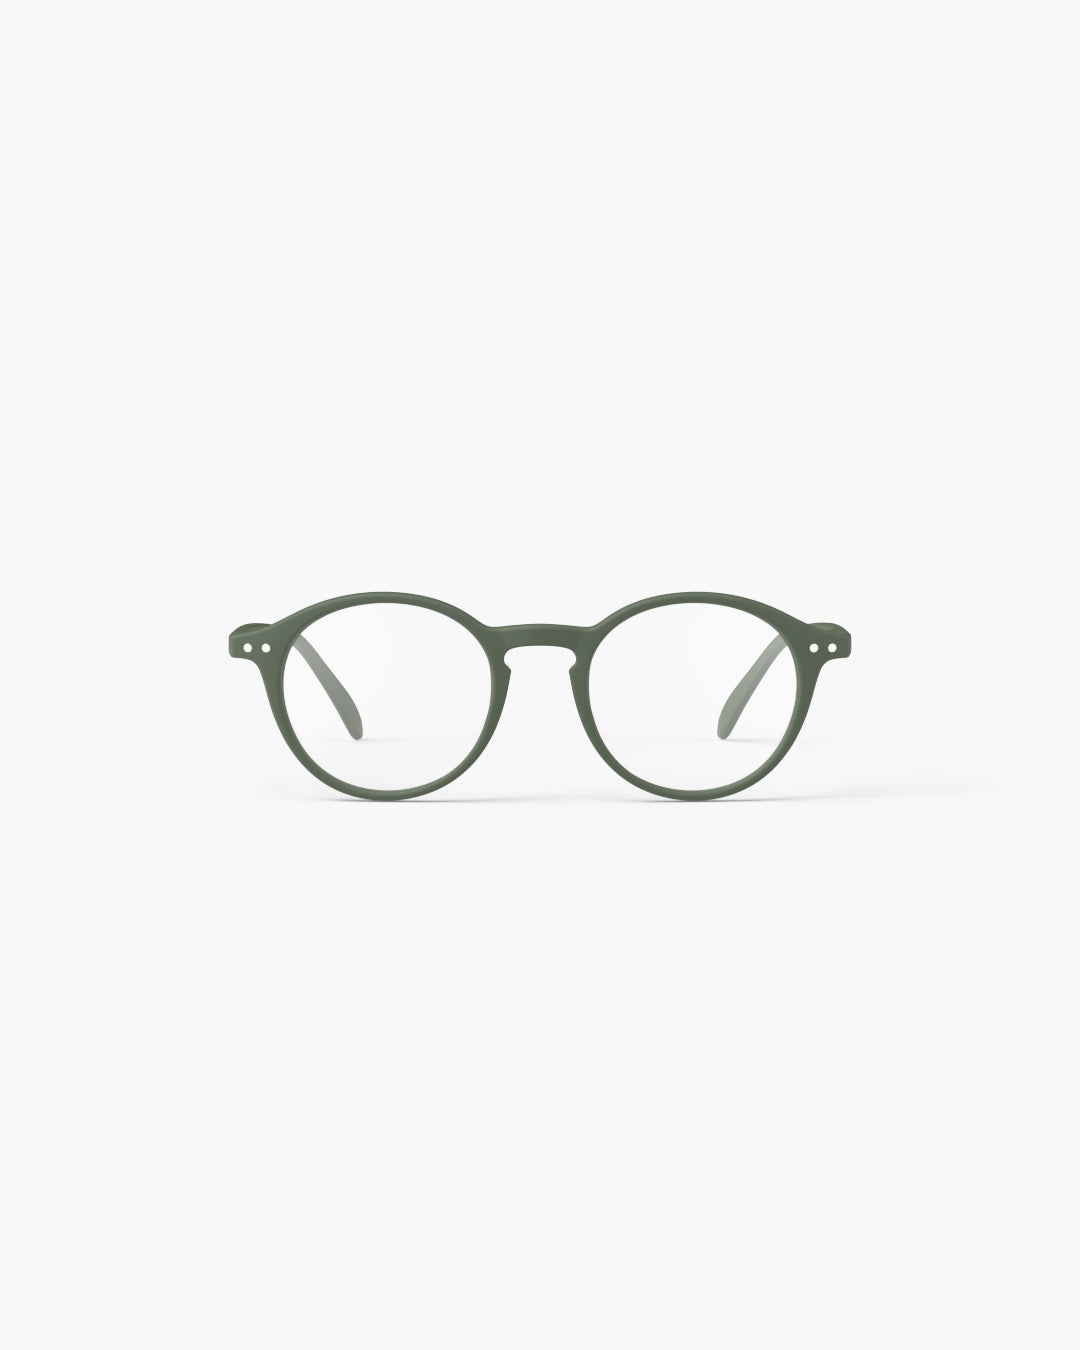 Izipizi #D Round Reading Glasses | 4 Colours Available